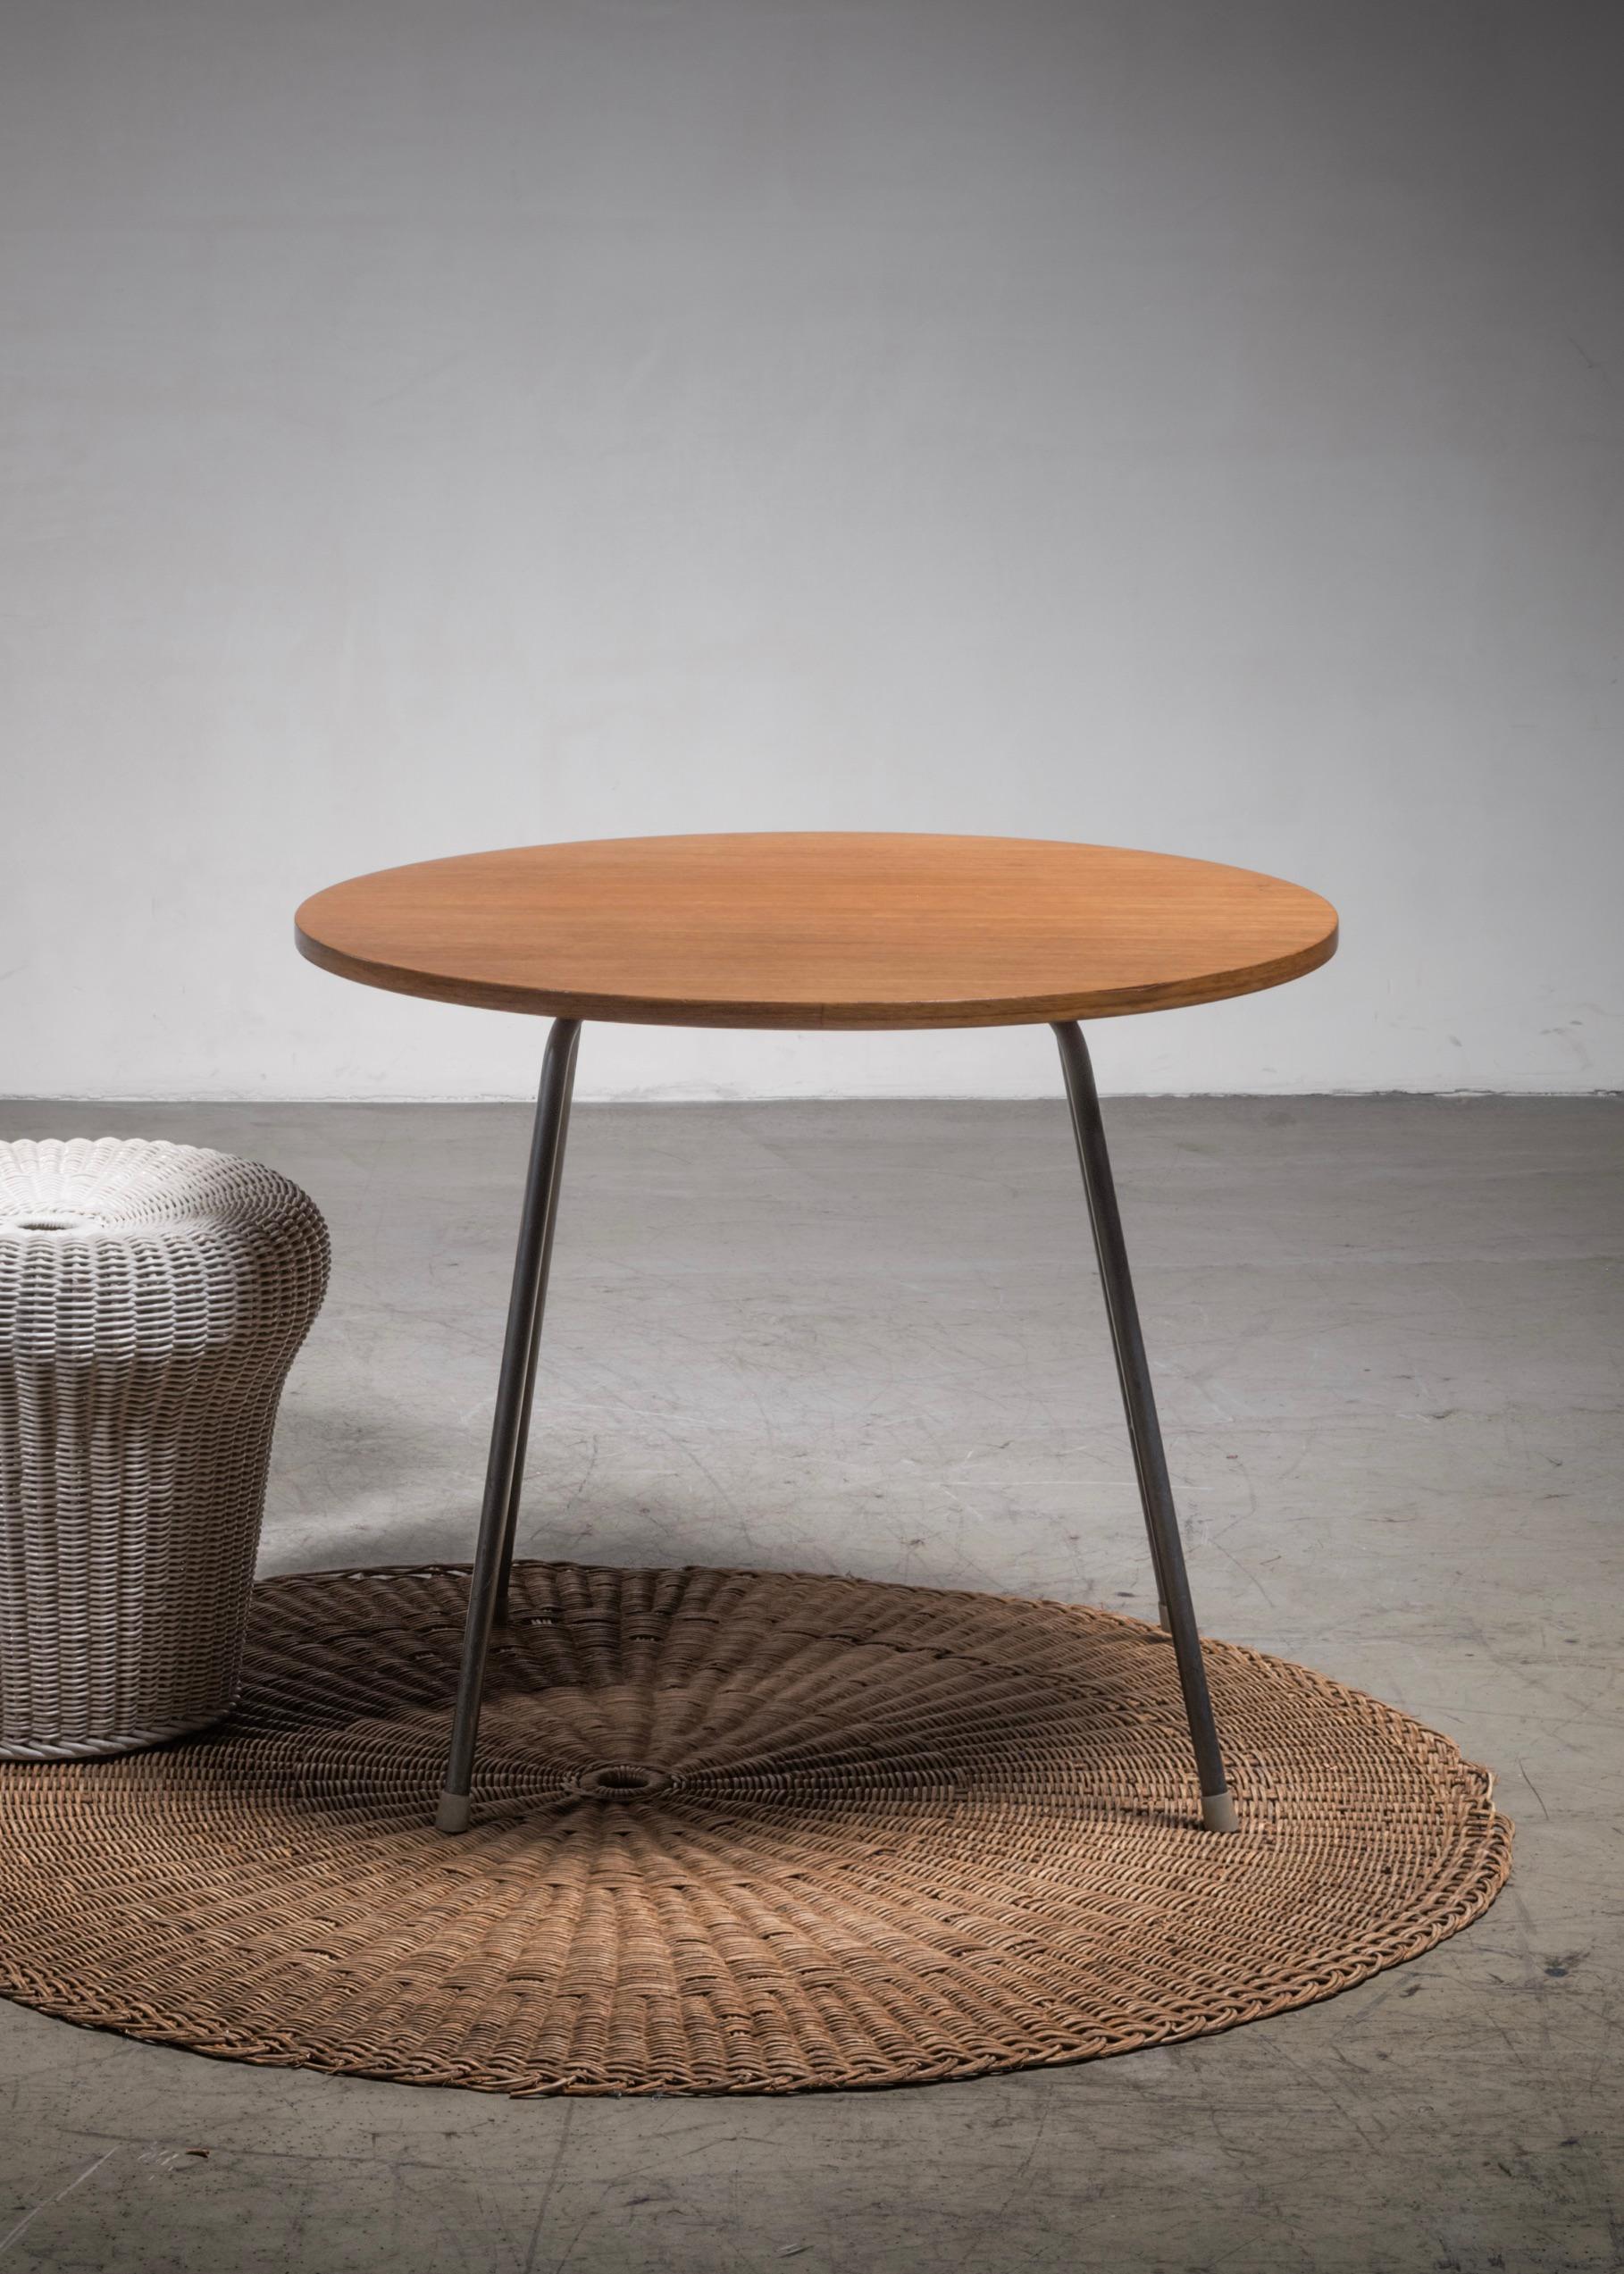 Mid-Century Modern Egon Eiermann table with wicker basket and floor mat For Sale